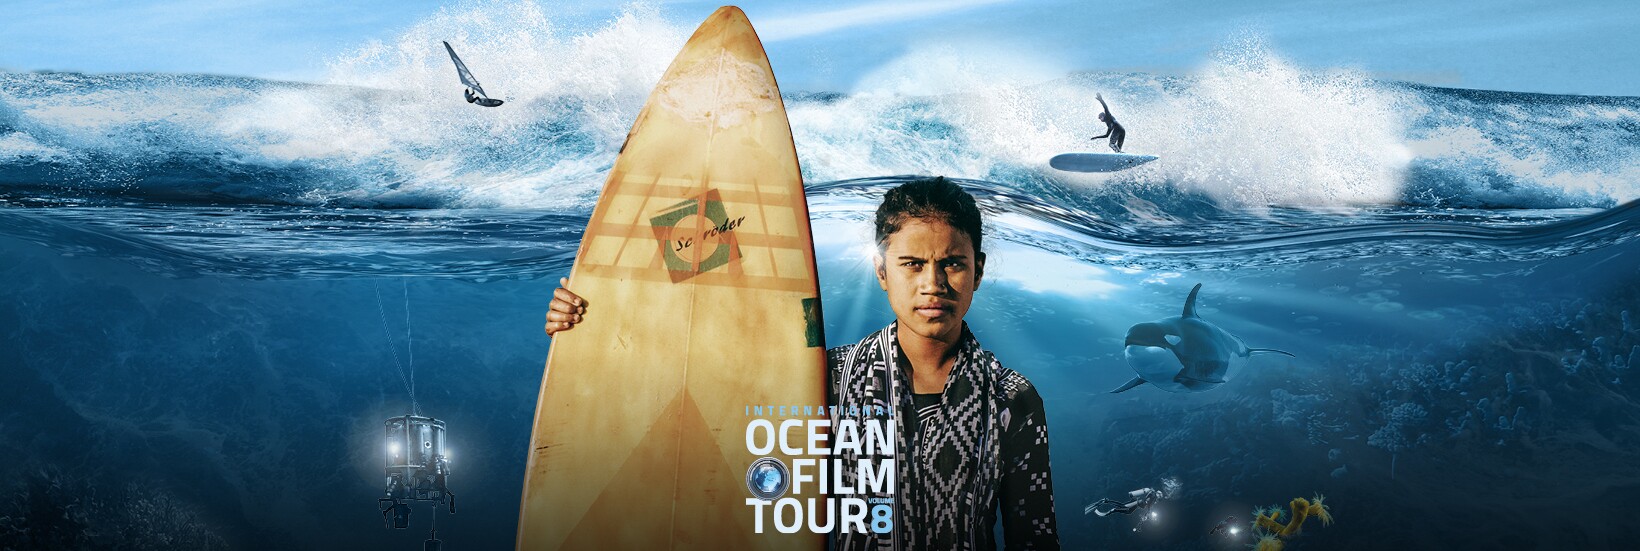 International Ocean Film Tour